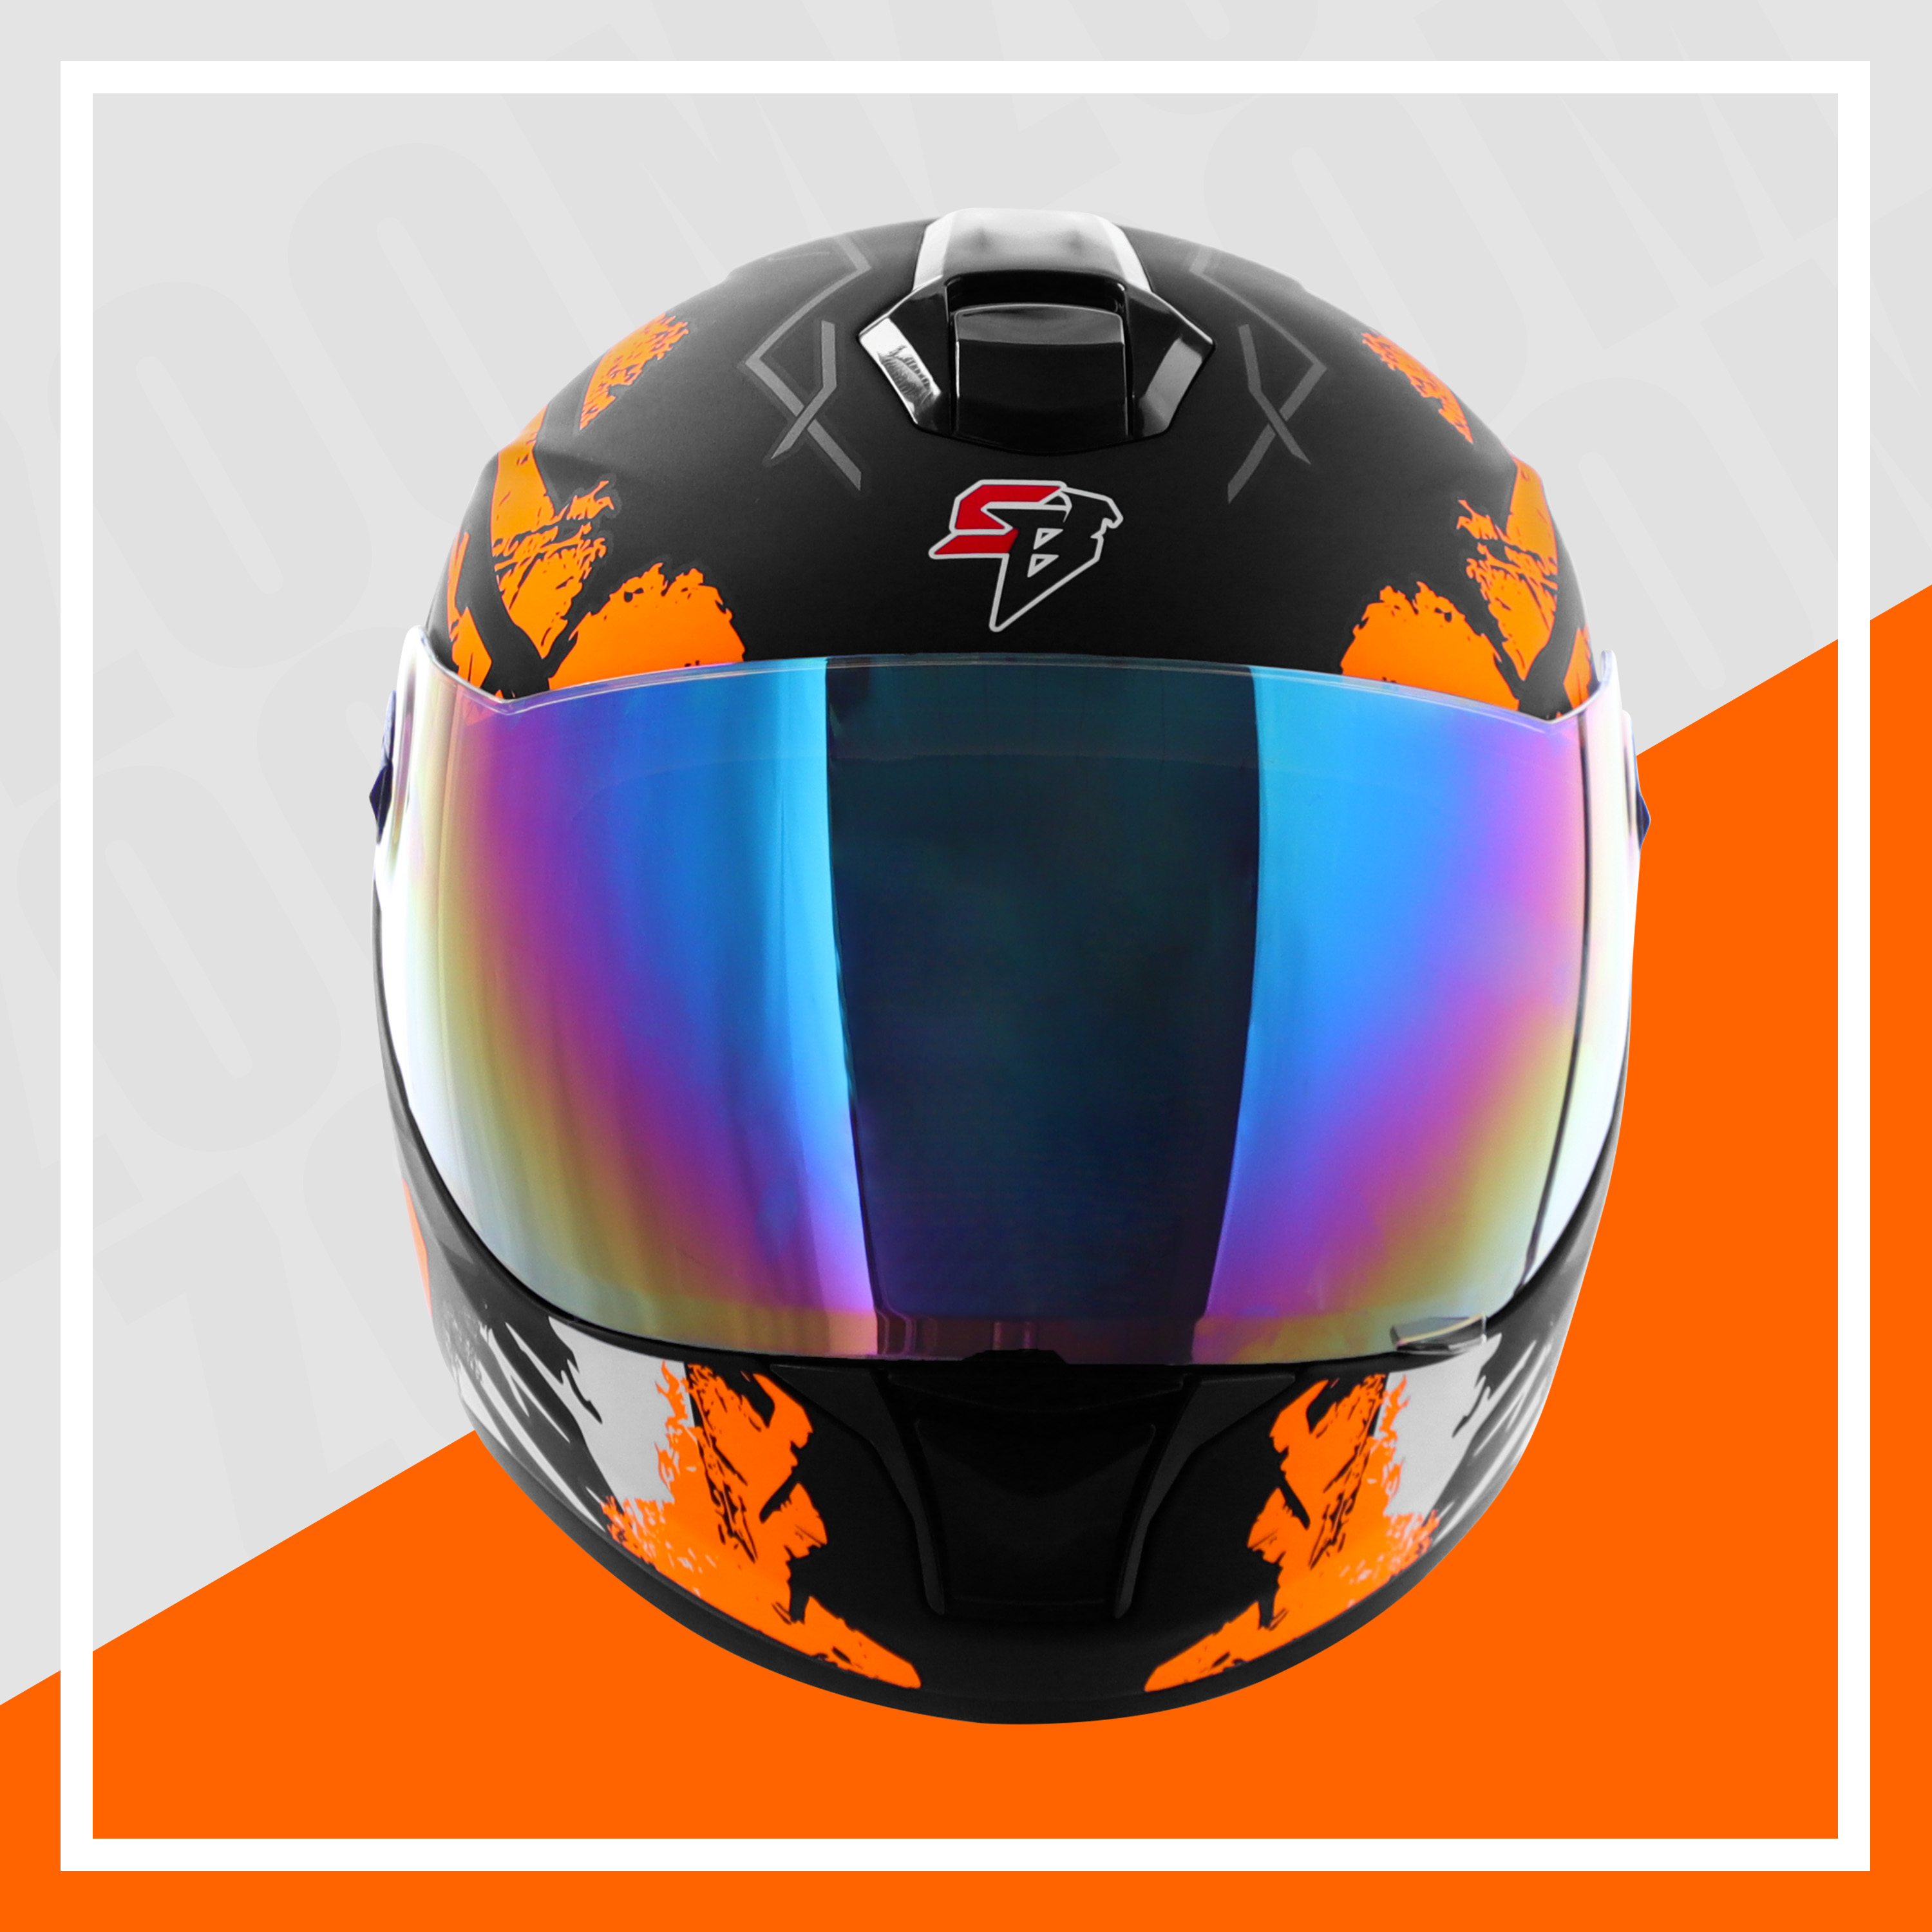 Steelbird SBH-11 Zoom Racer ISI Certified Full Face Graphic Helmet For Men And Women (Glossy Black Orange With Chrome Rainbow Visor)